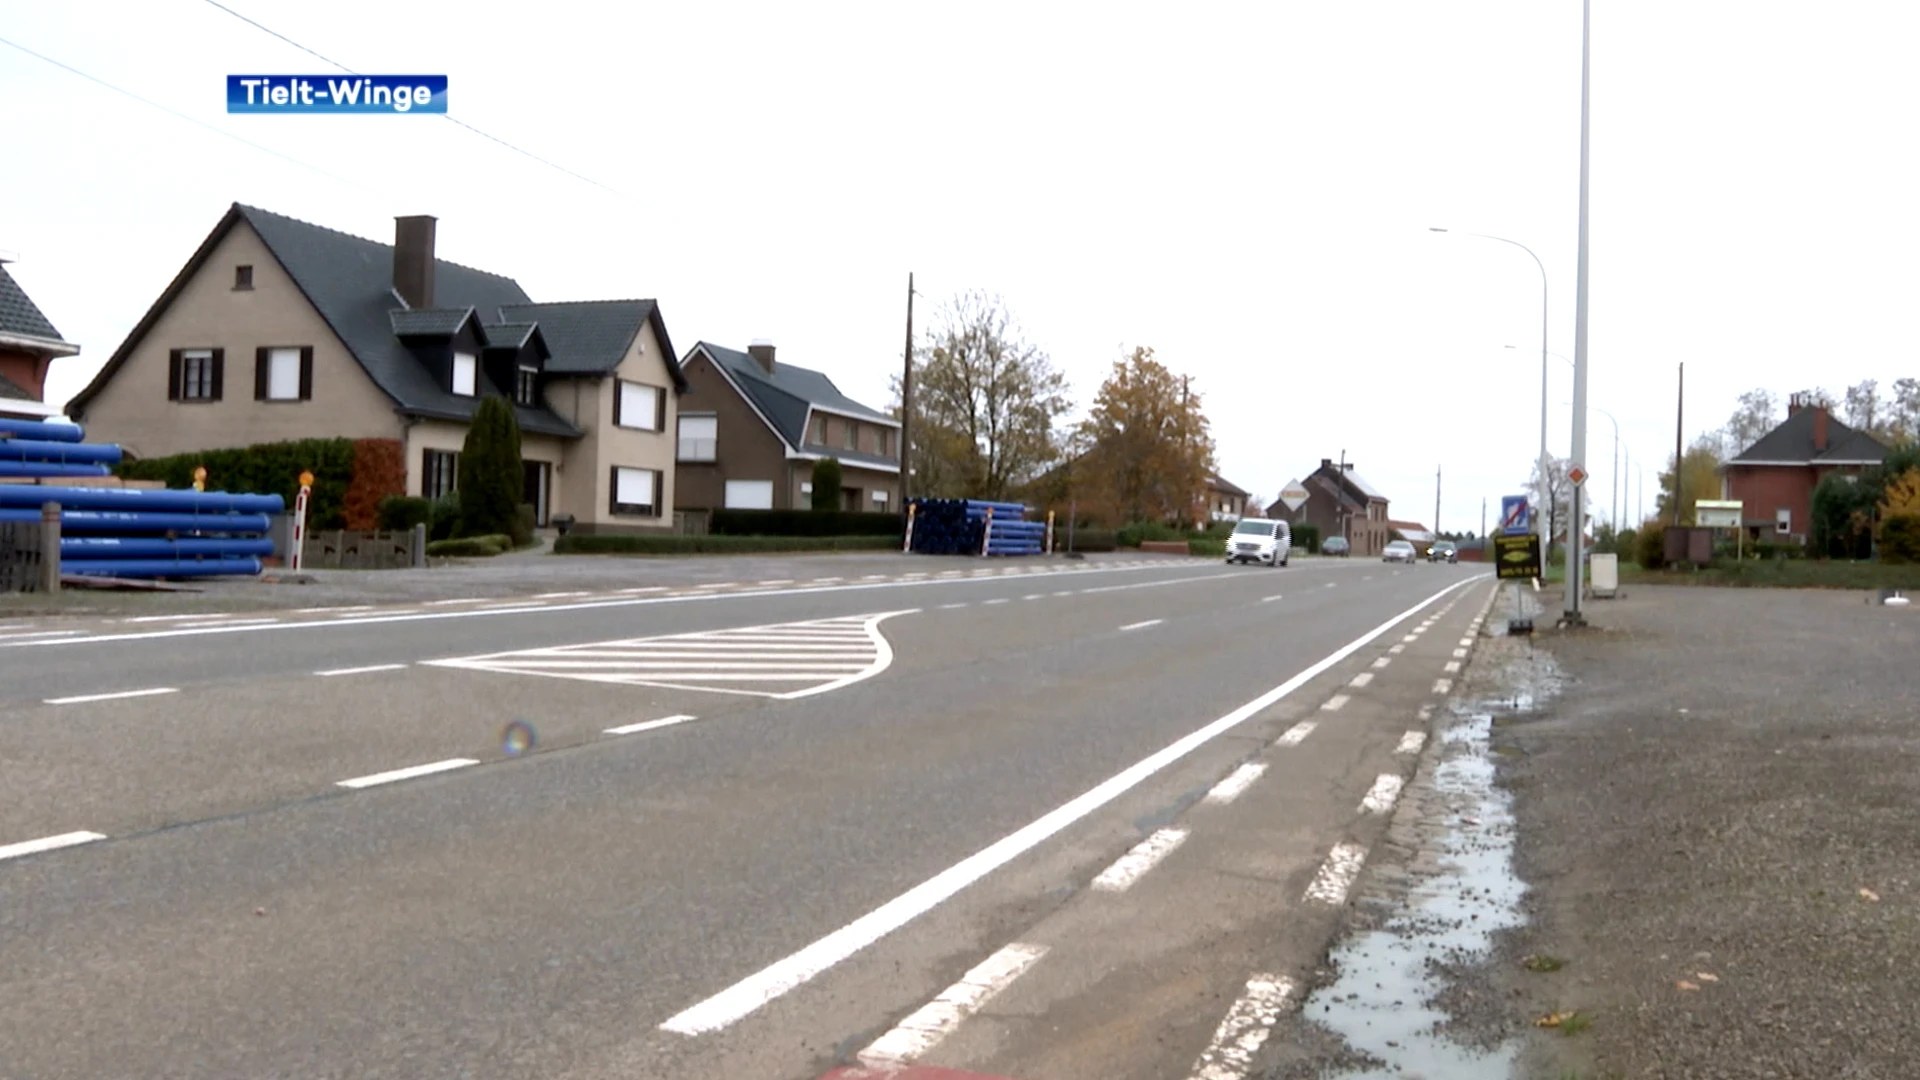 Staatsbaan Tielt-Winge op dinsdag 22 november afgesloten voor alle verkeer ter hoogte van kruispunt Rijsbergstraat-Heidebergstraat